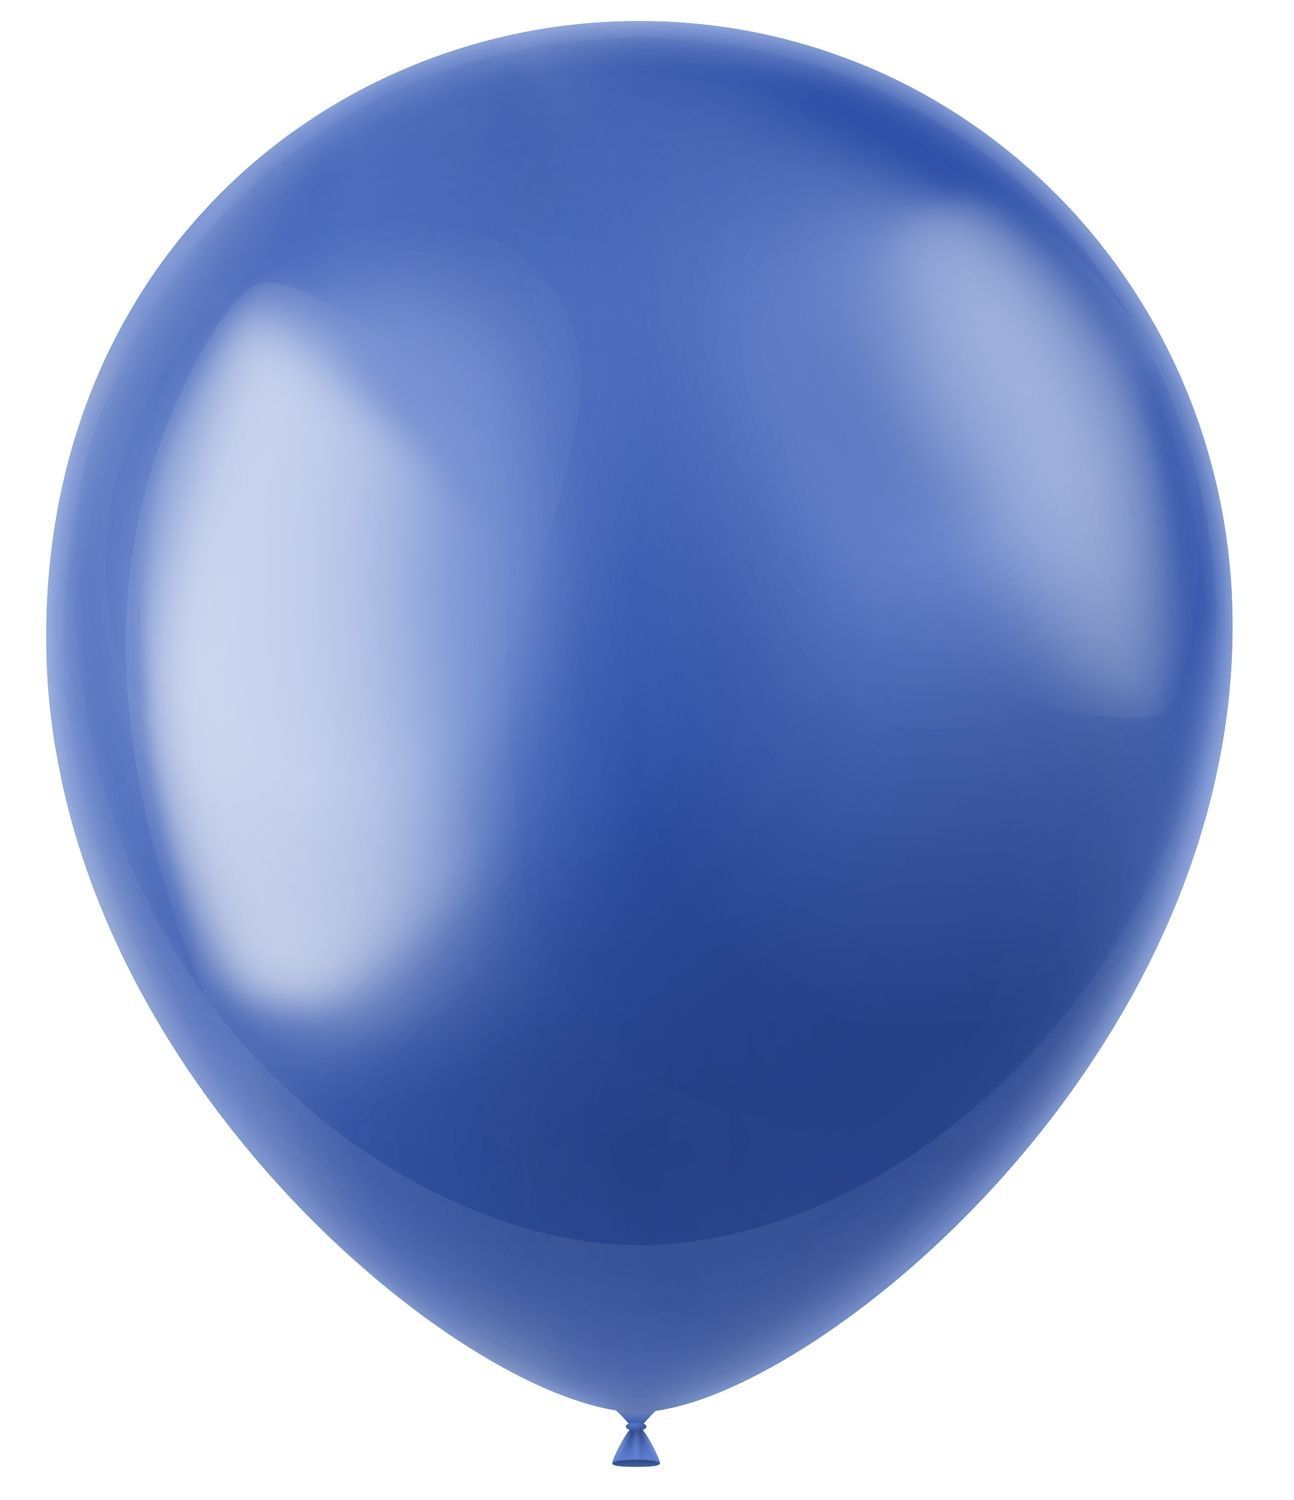 Royal blauwe metallic ballonnen 50 stuks